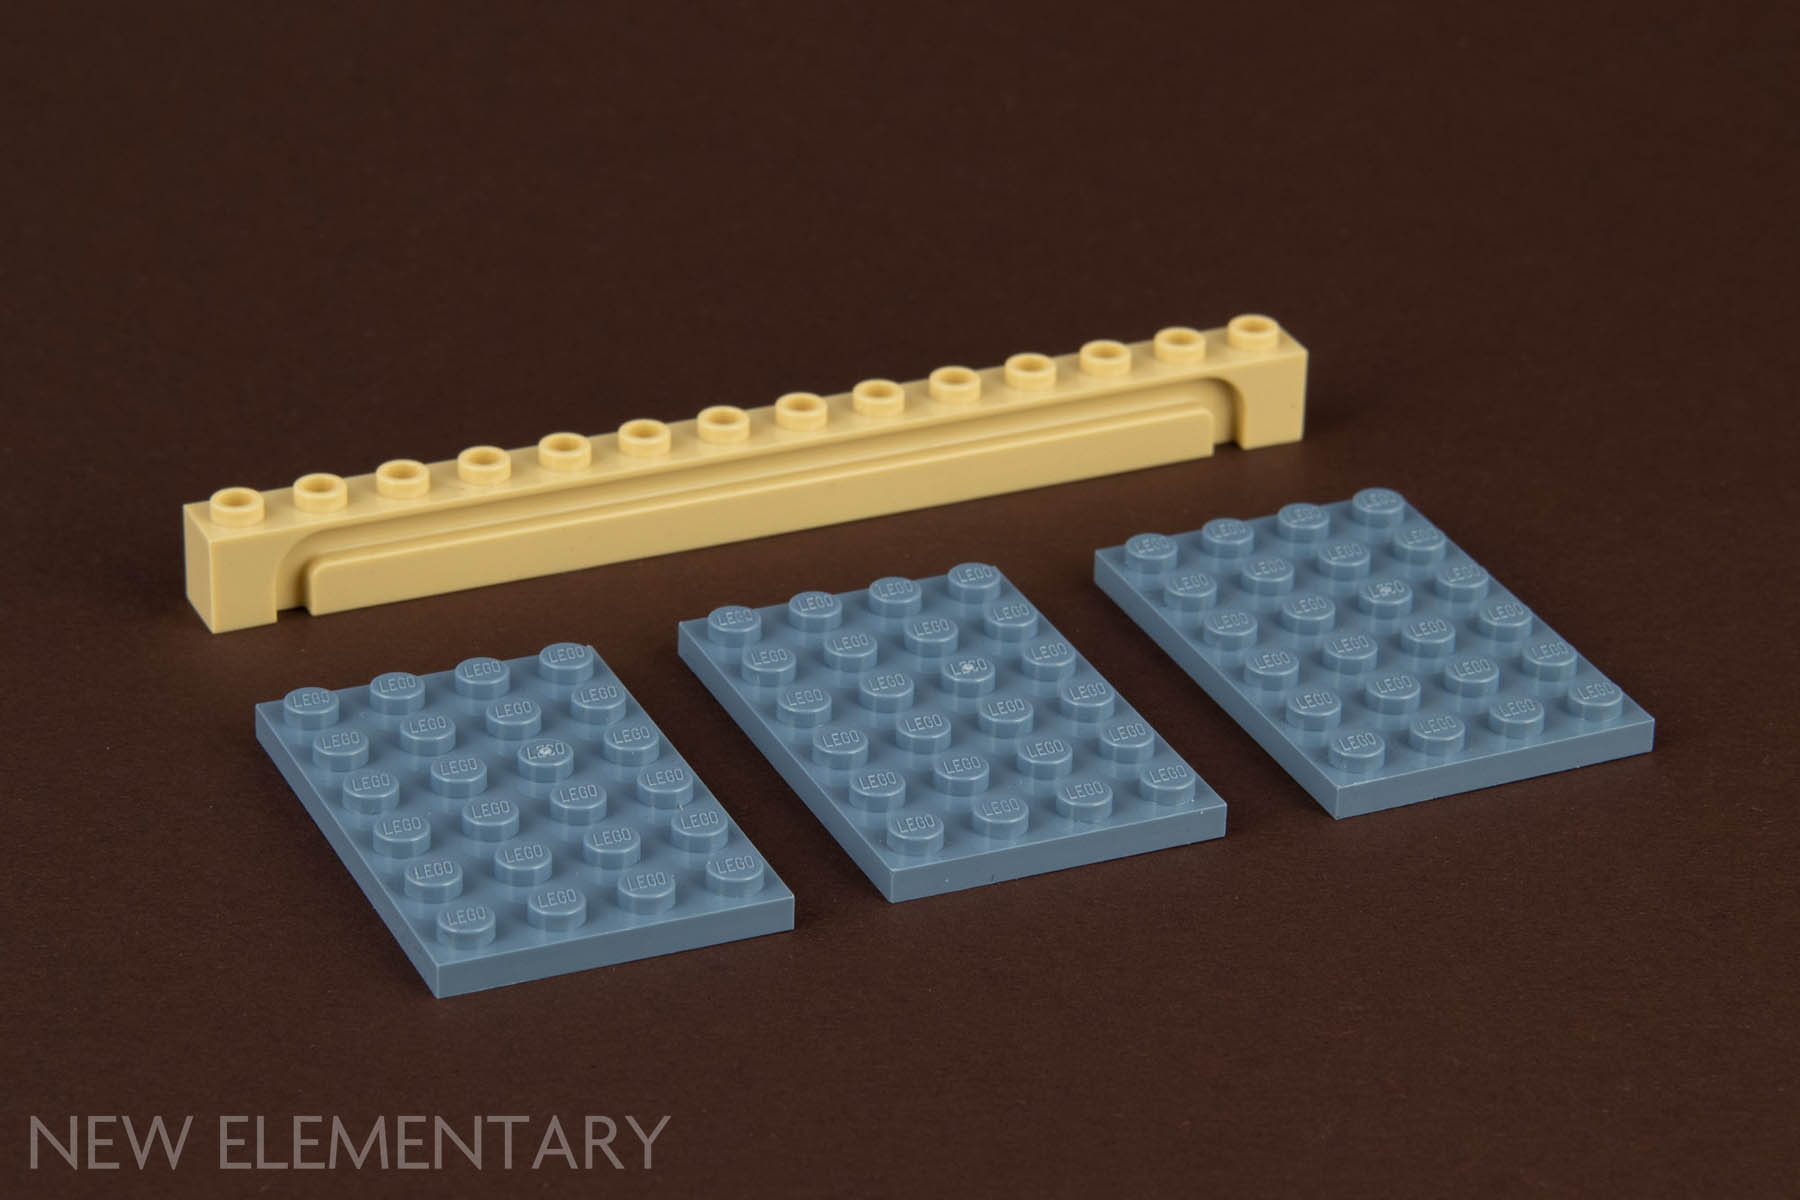 Lego Harry Potter: Years 1-4 Gold Bricks – Bone Fish Gamer